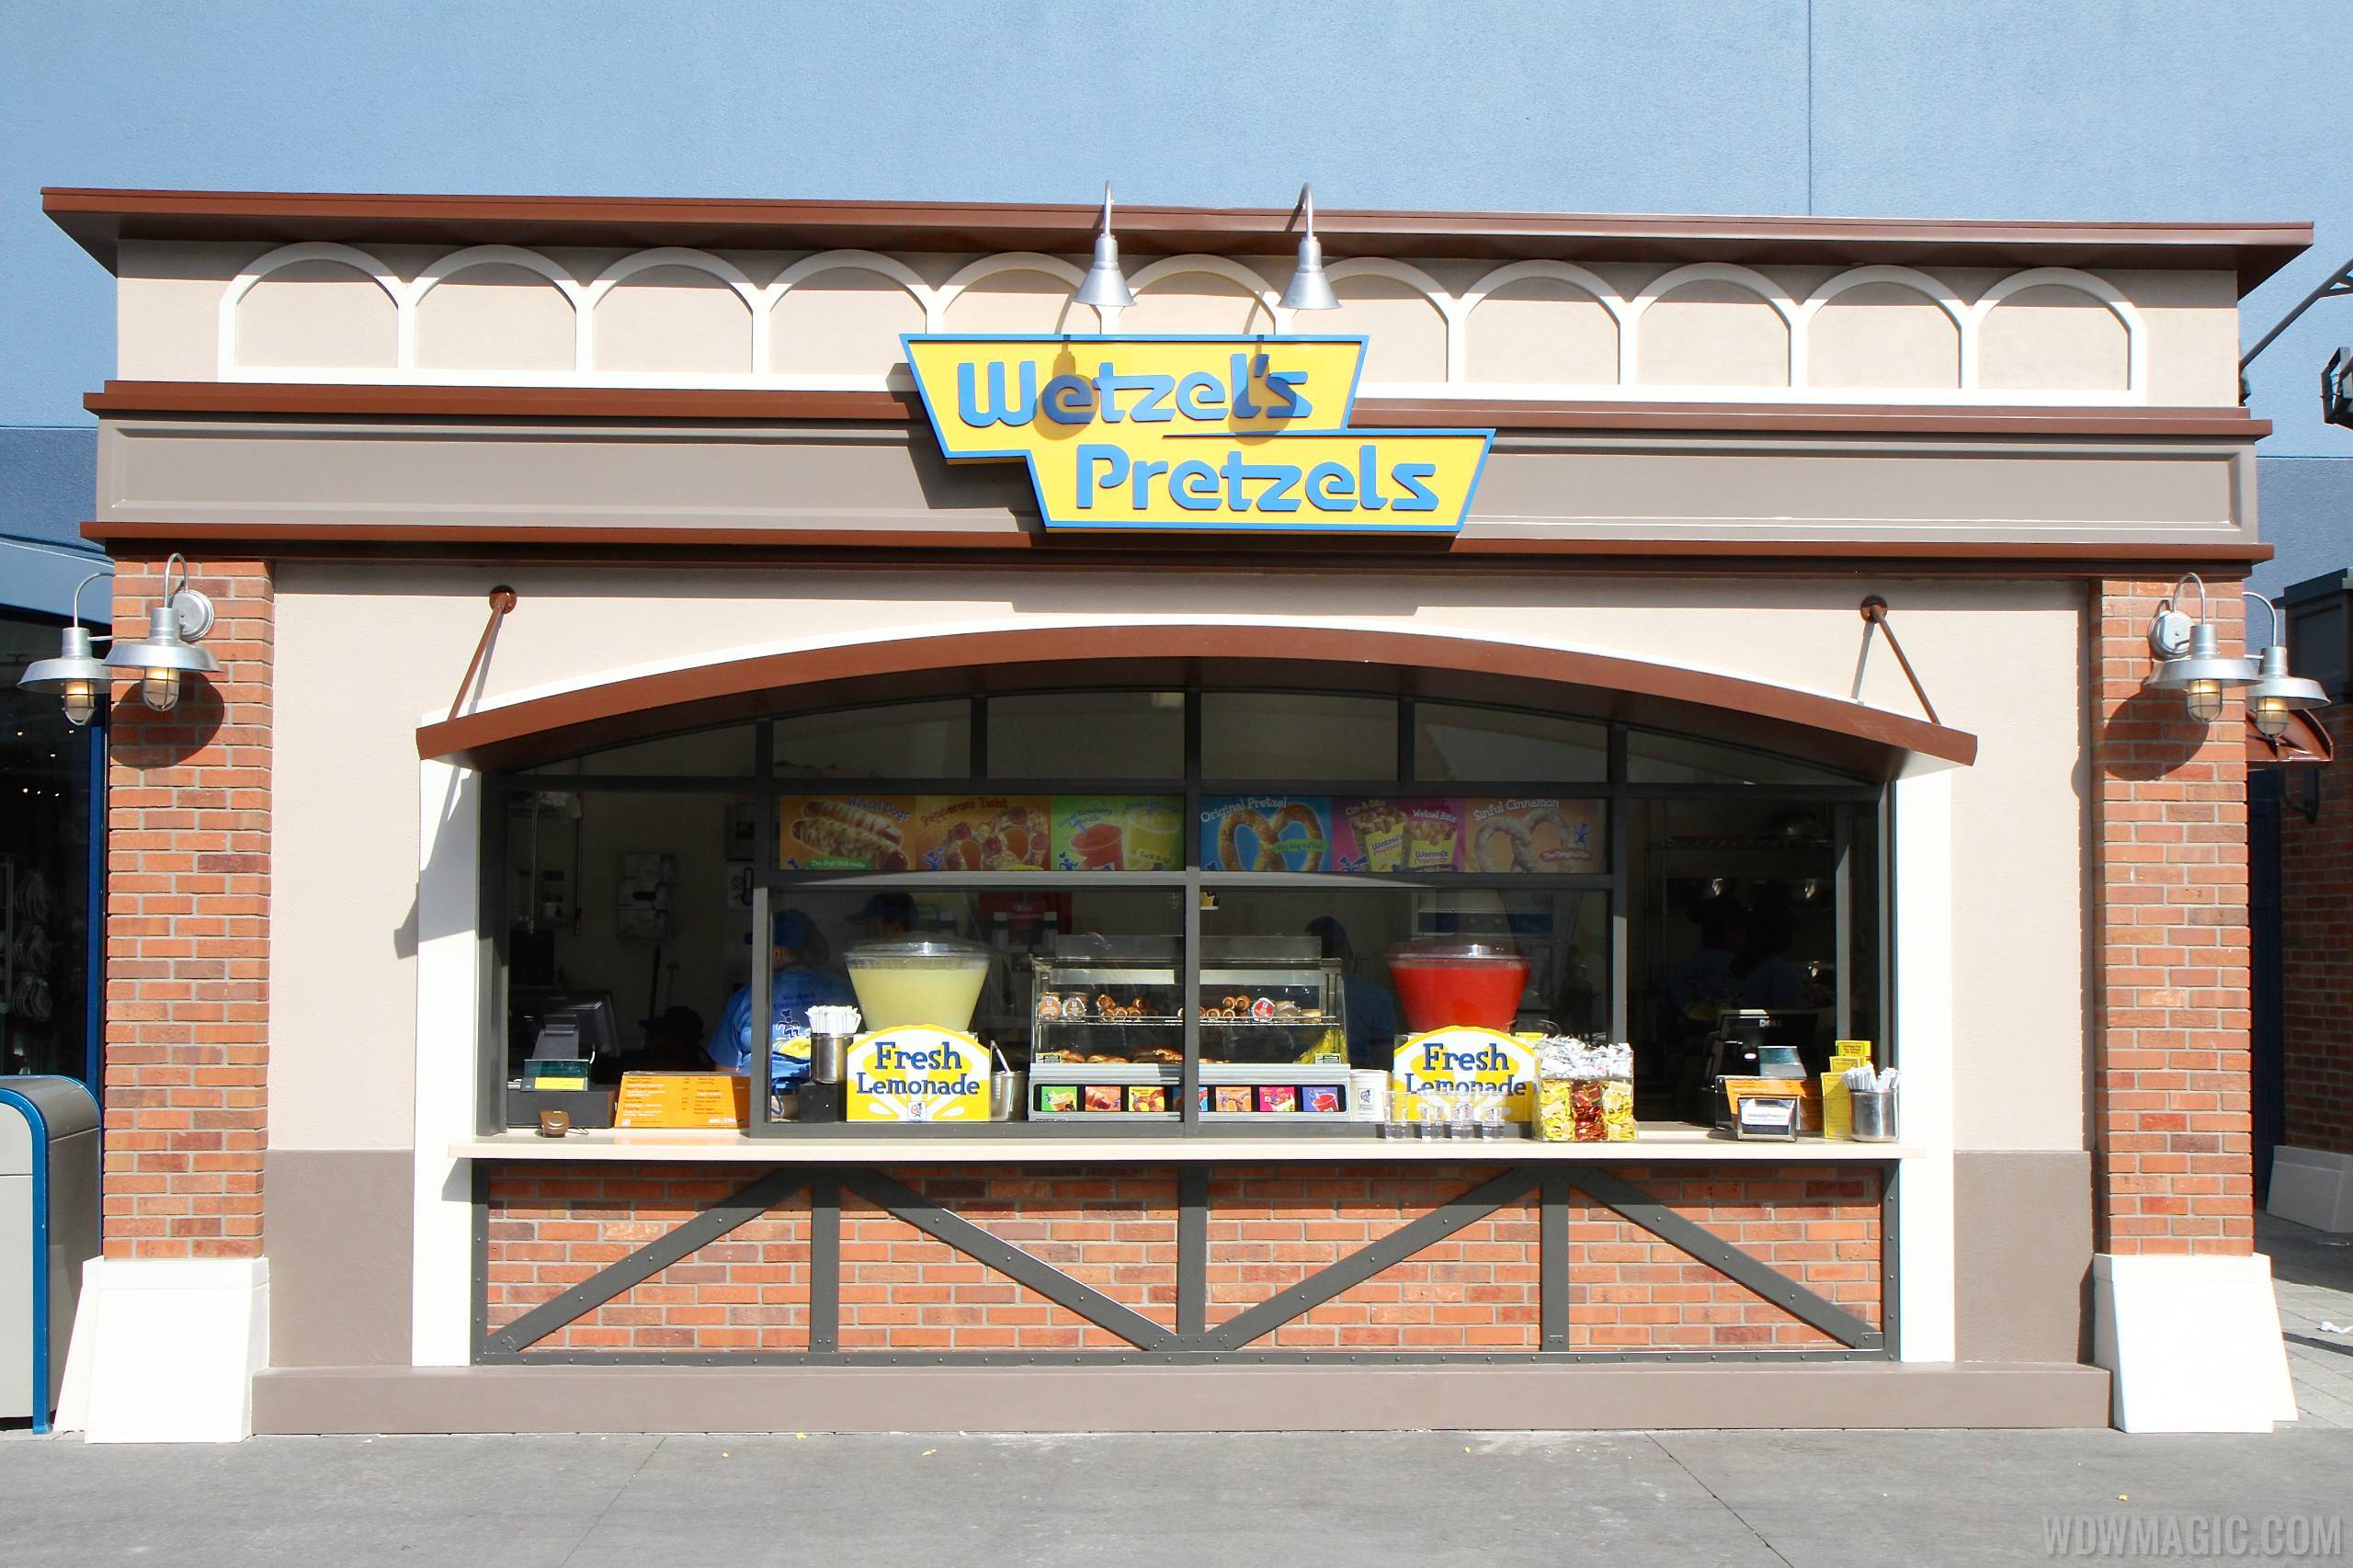 West Side Wetzel's Pretzels kiosk open